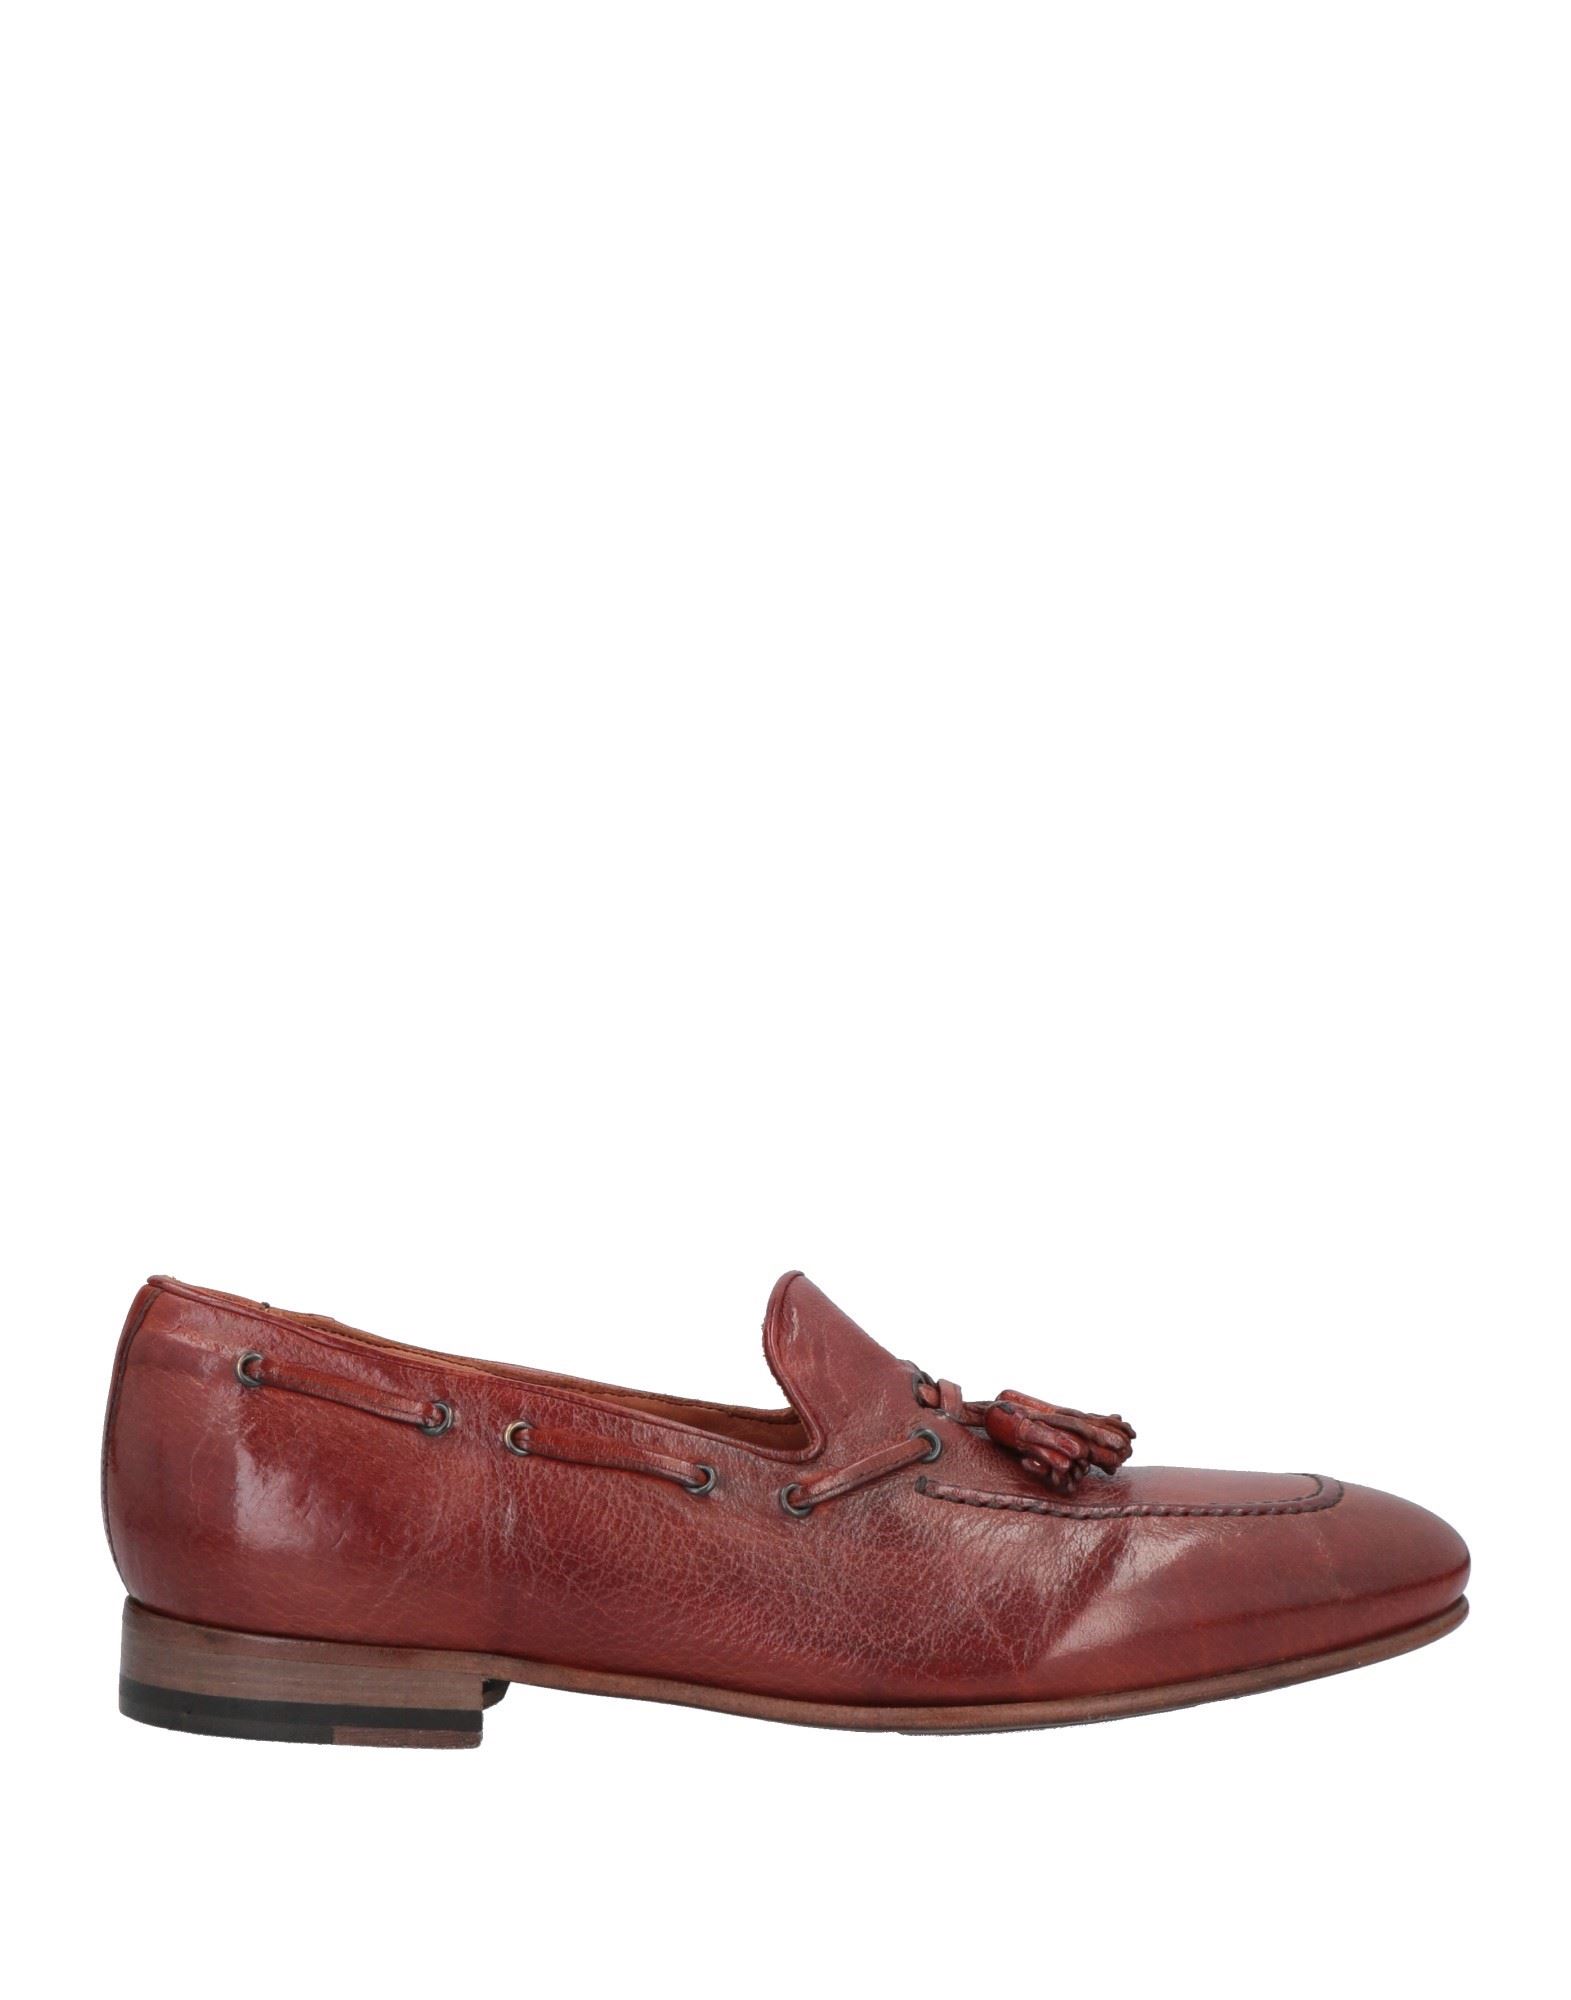 STURLINI Shoes for Men | ModeSens